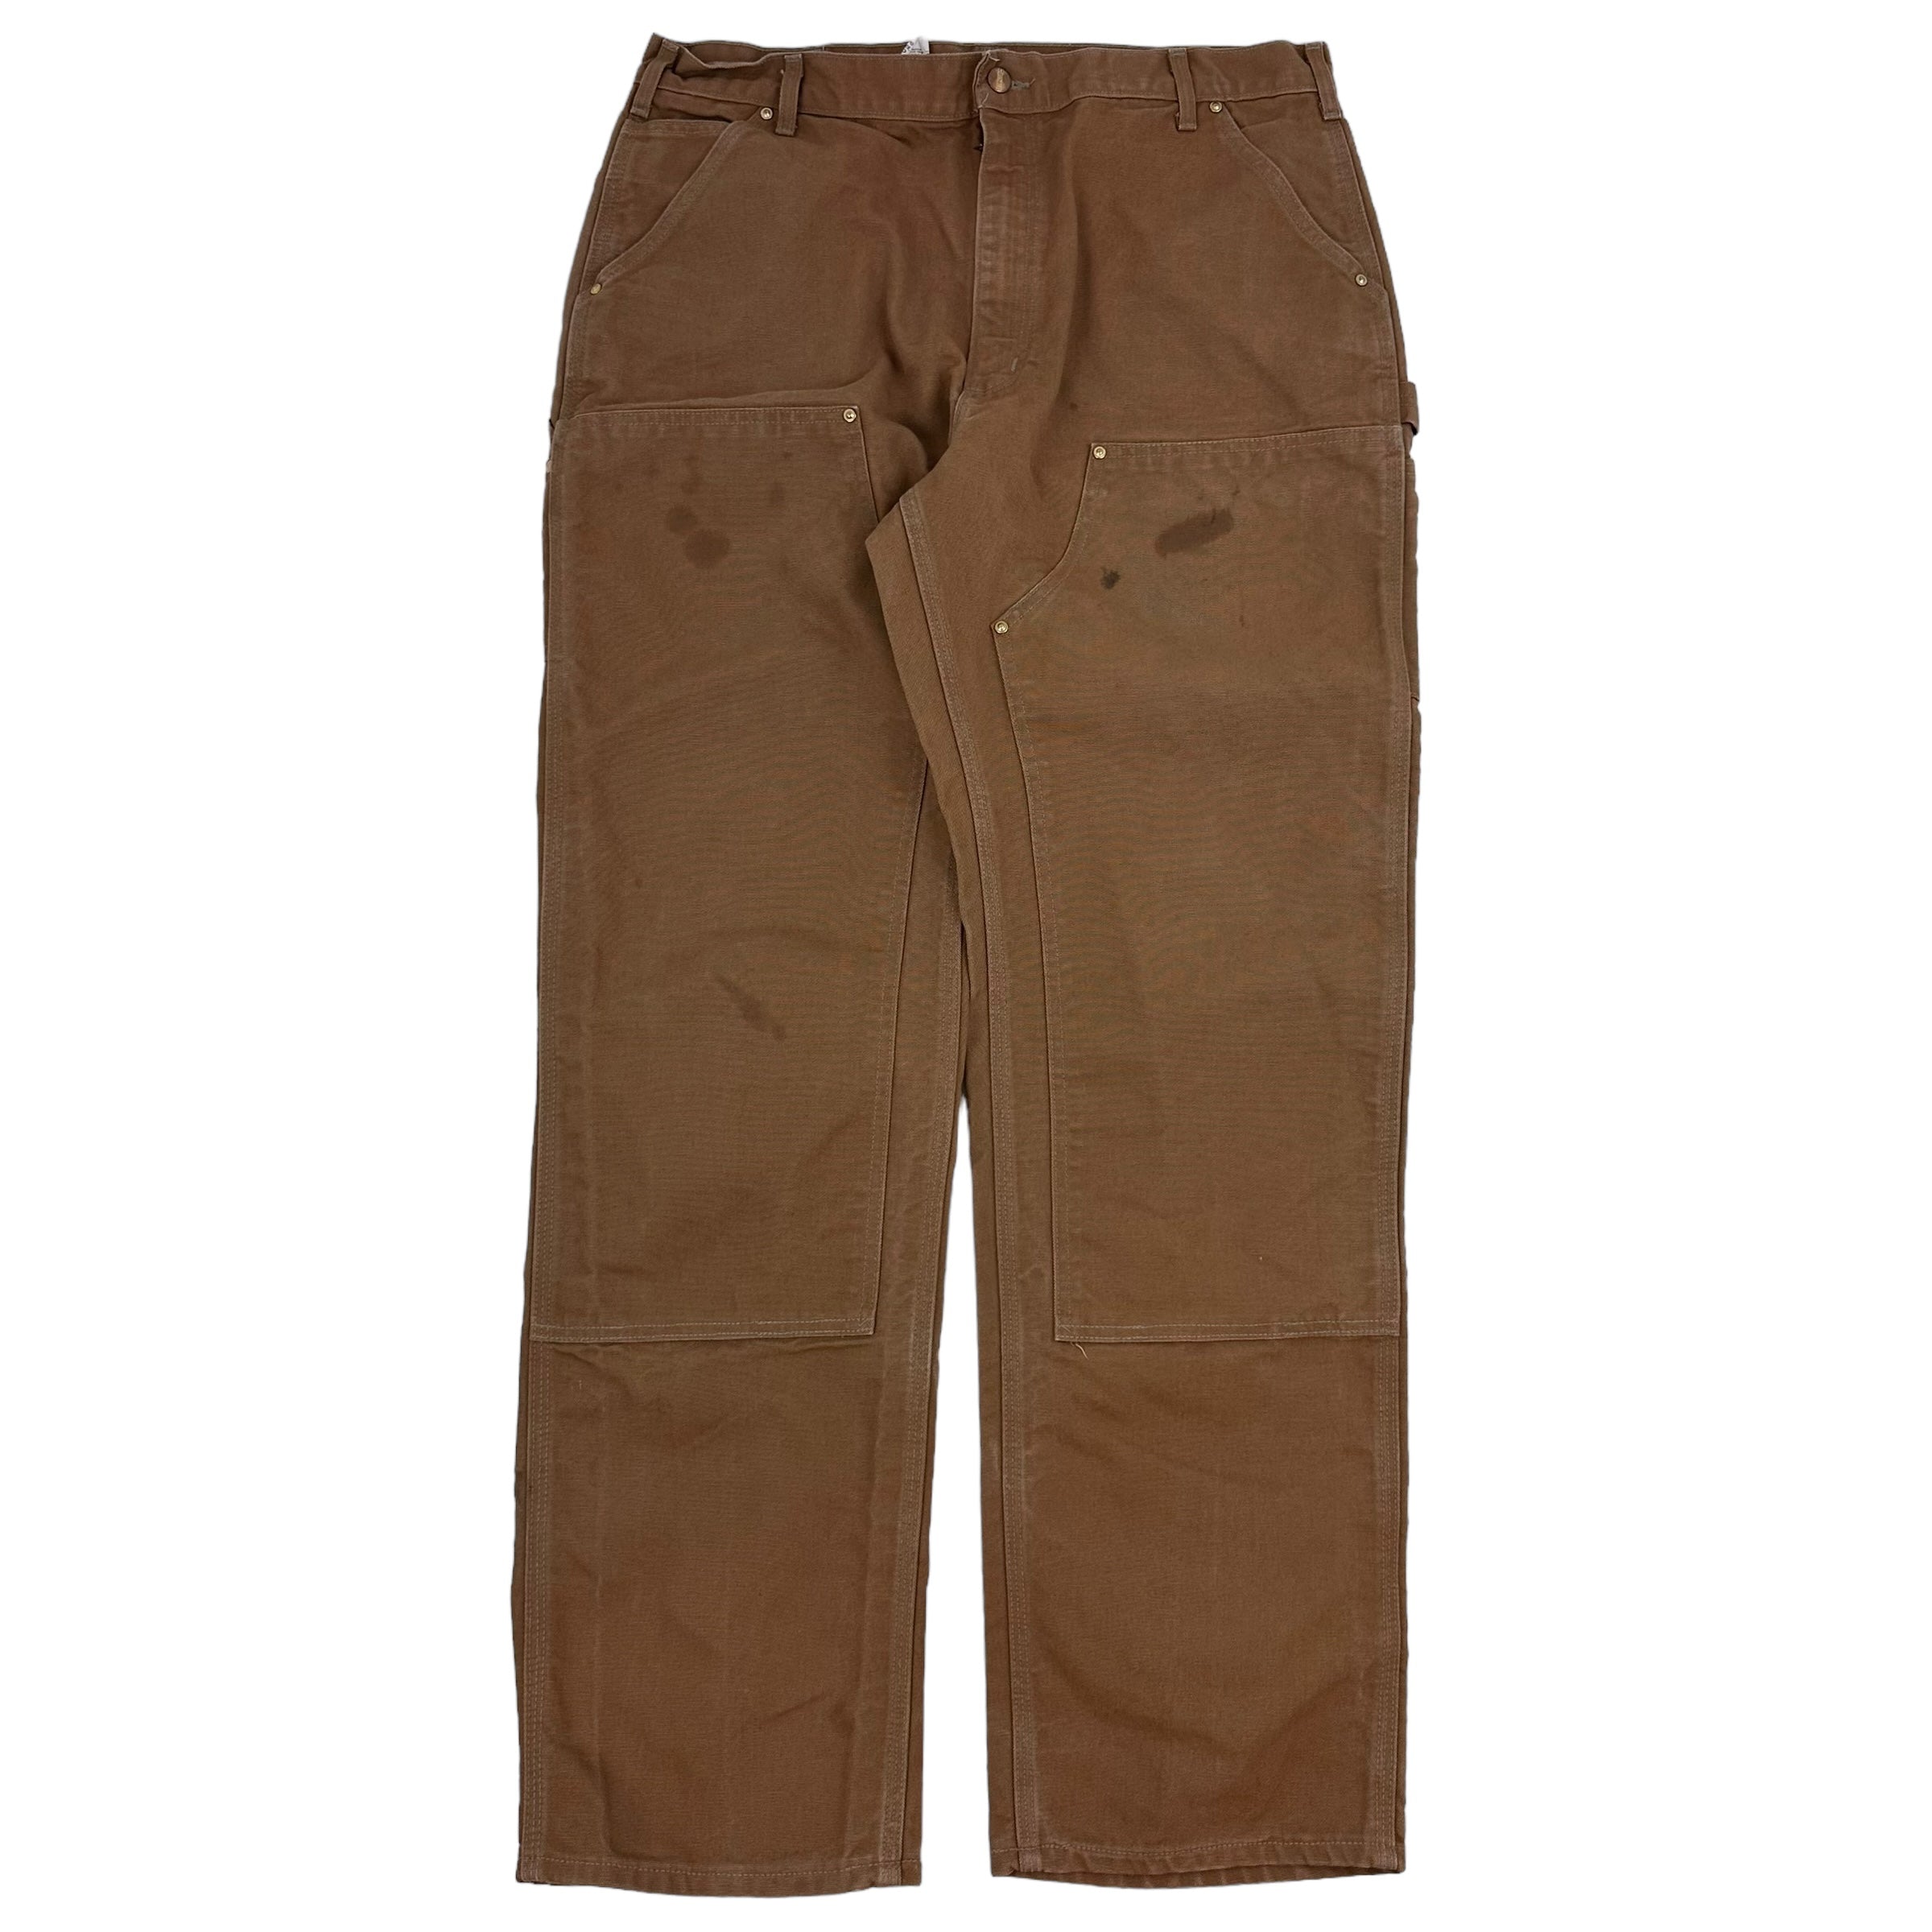 Vintage Carhartt Double Knee Pants Light Brown